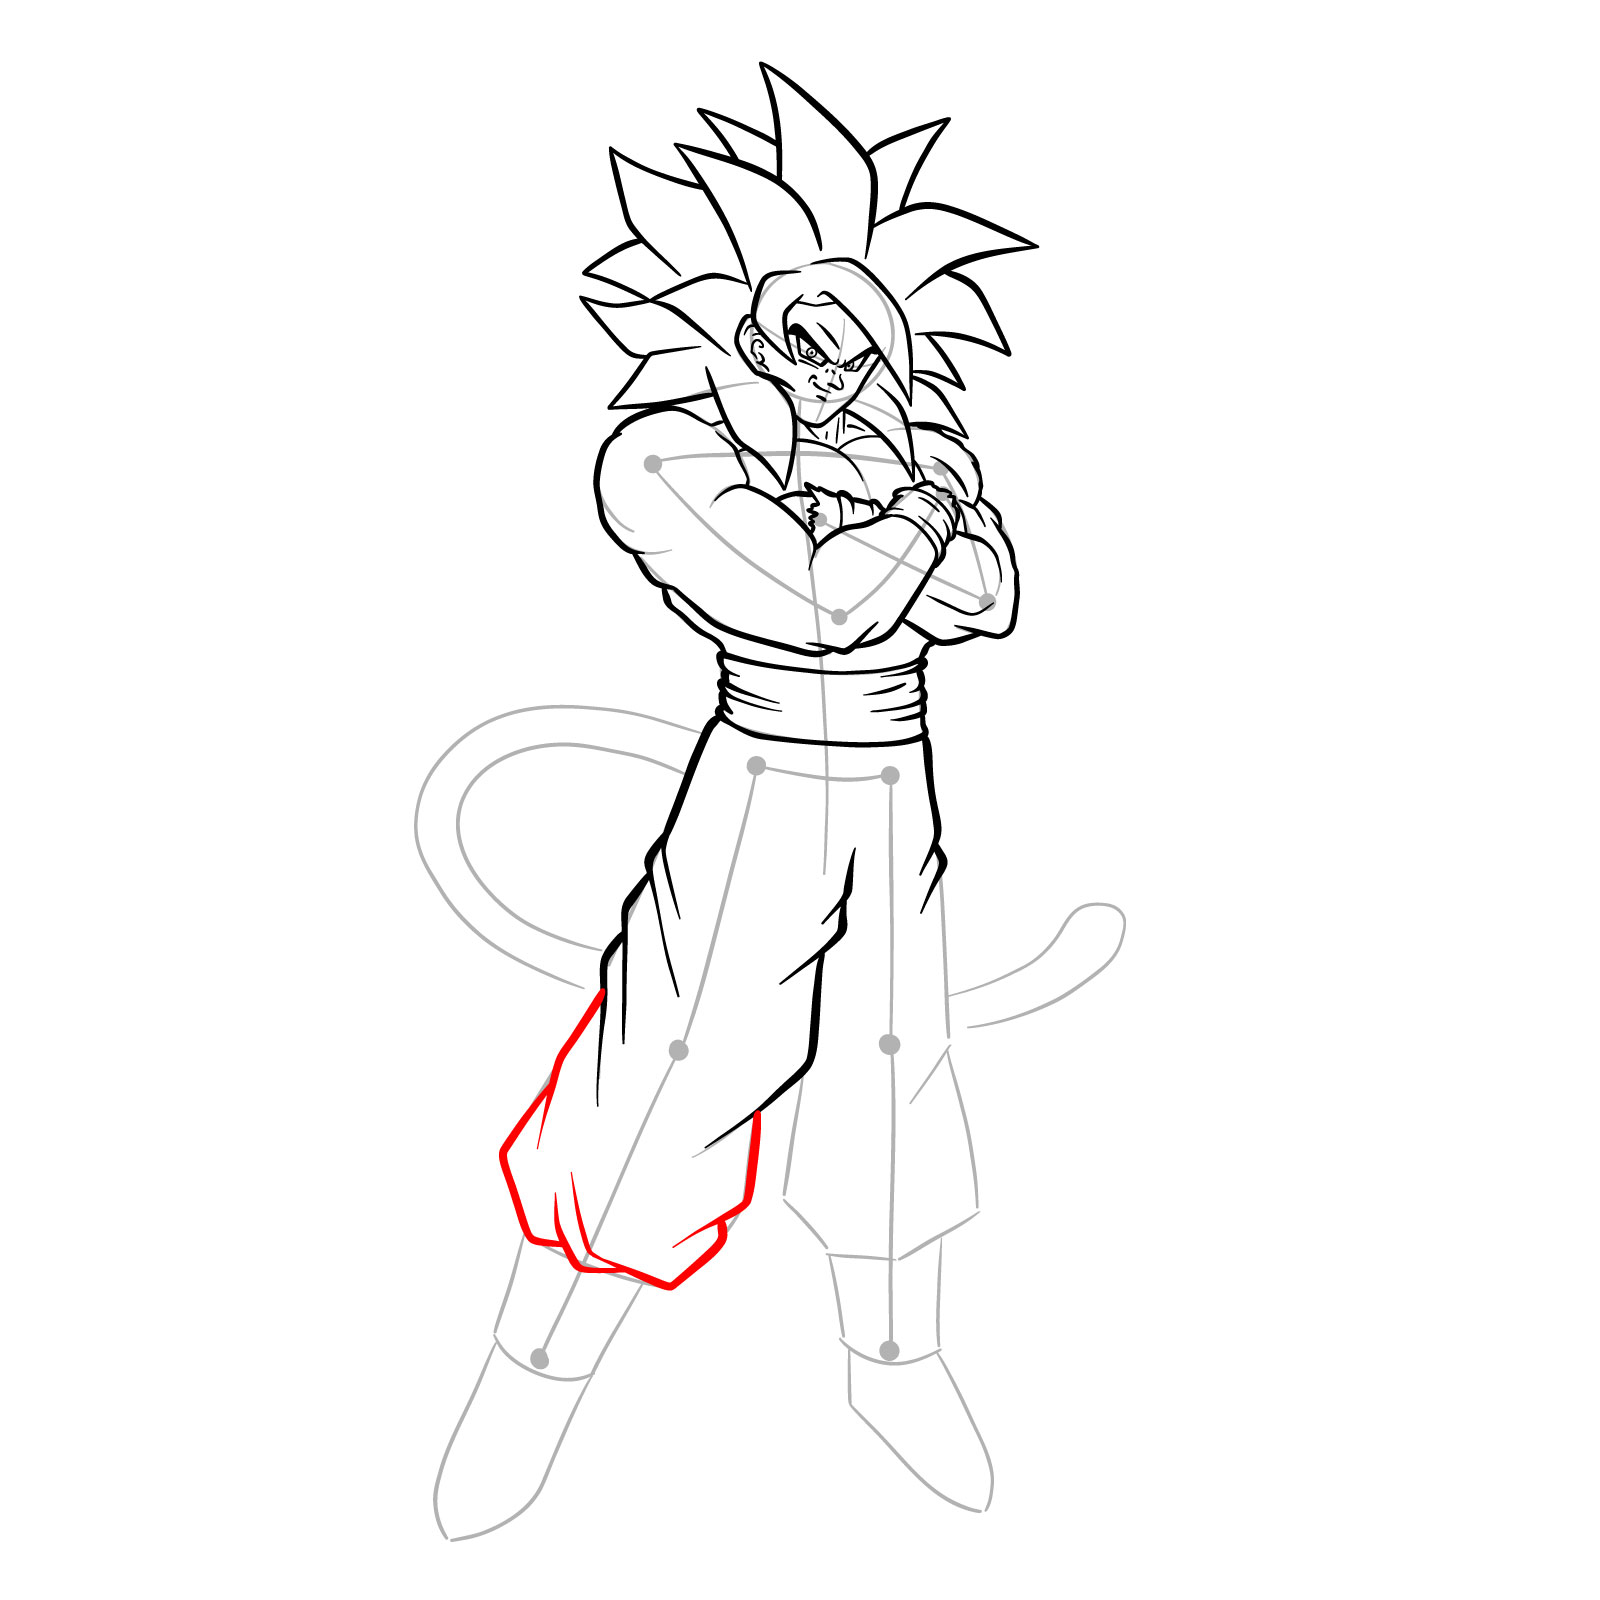 How to tát draw Goku Super Saiyan 4 - step 25